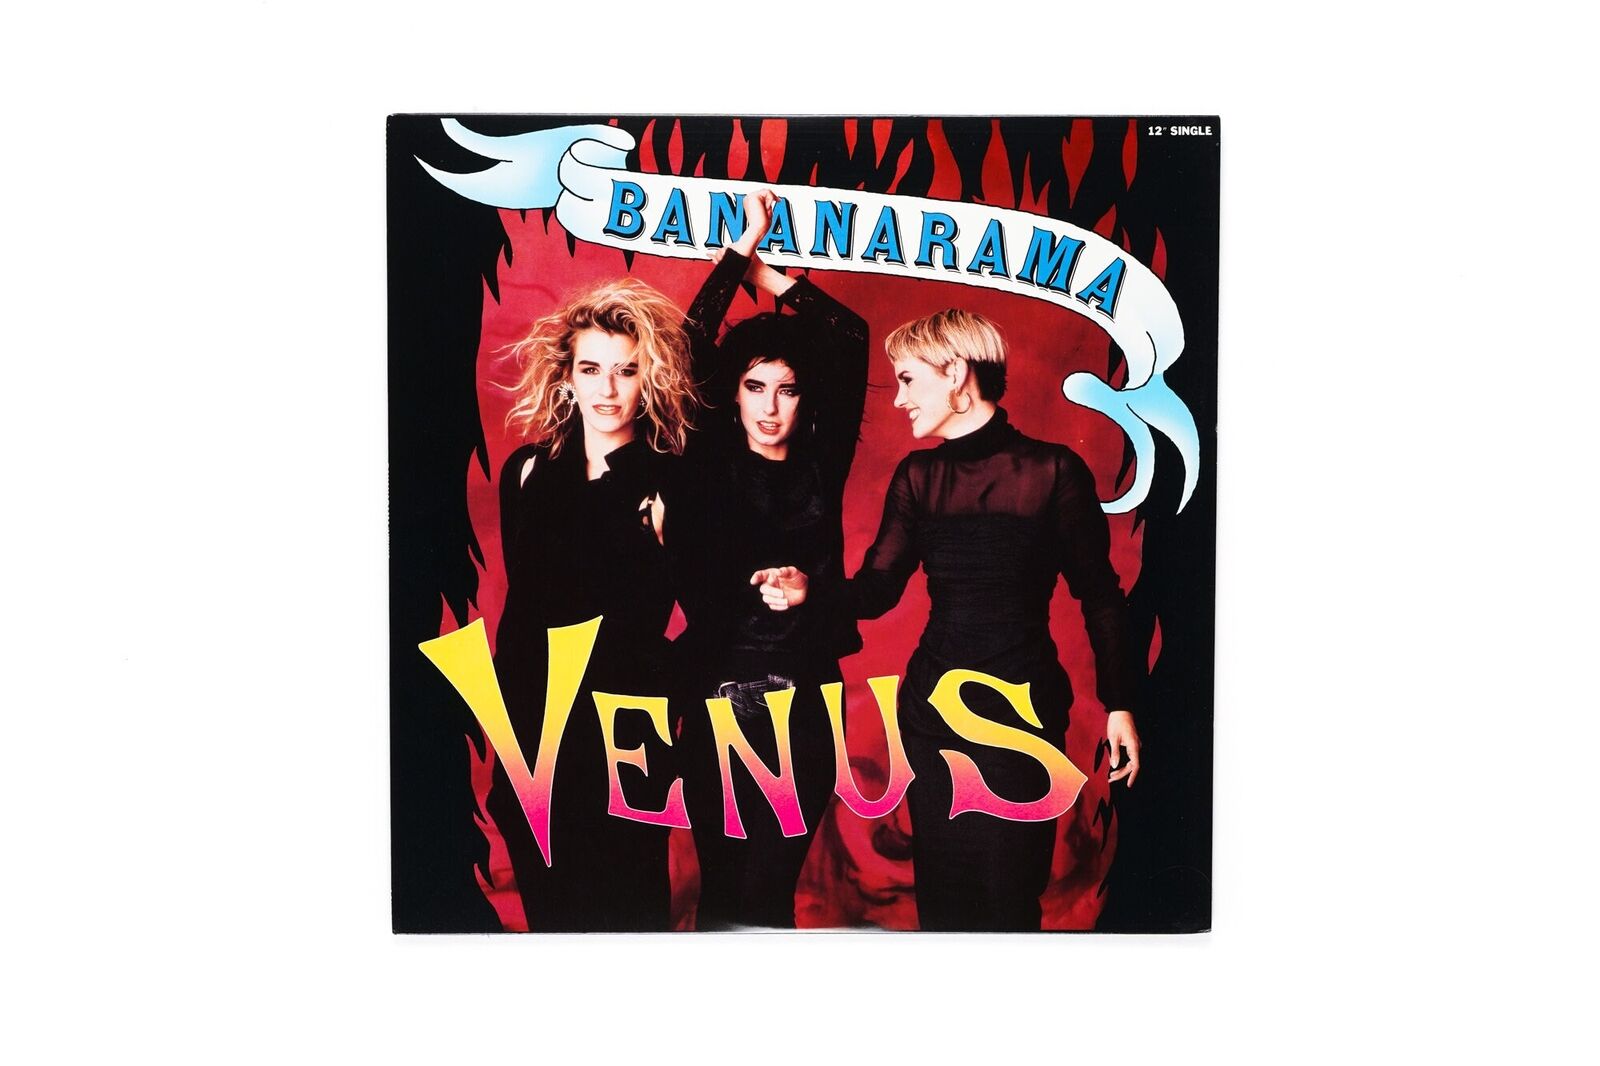 Bananarama - Venus - Vinyl LP Record - 1986